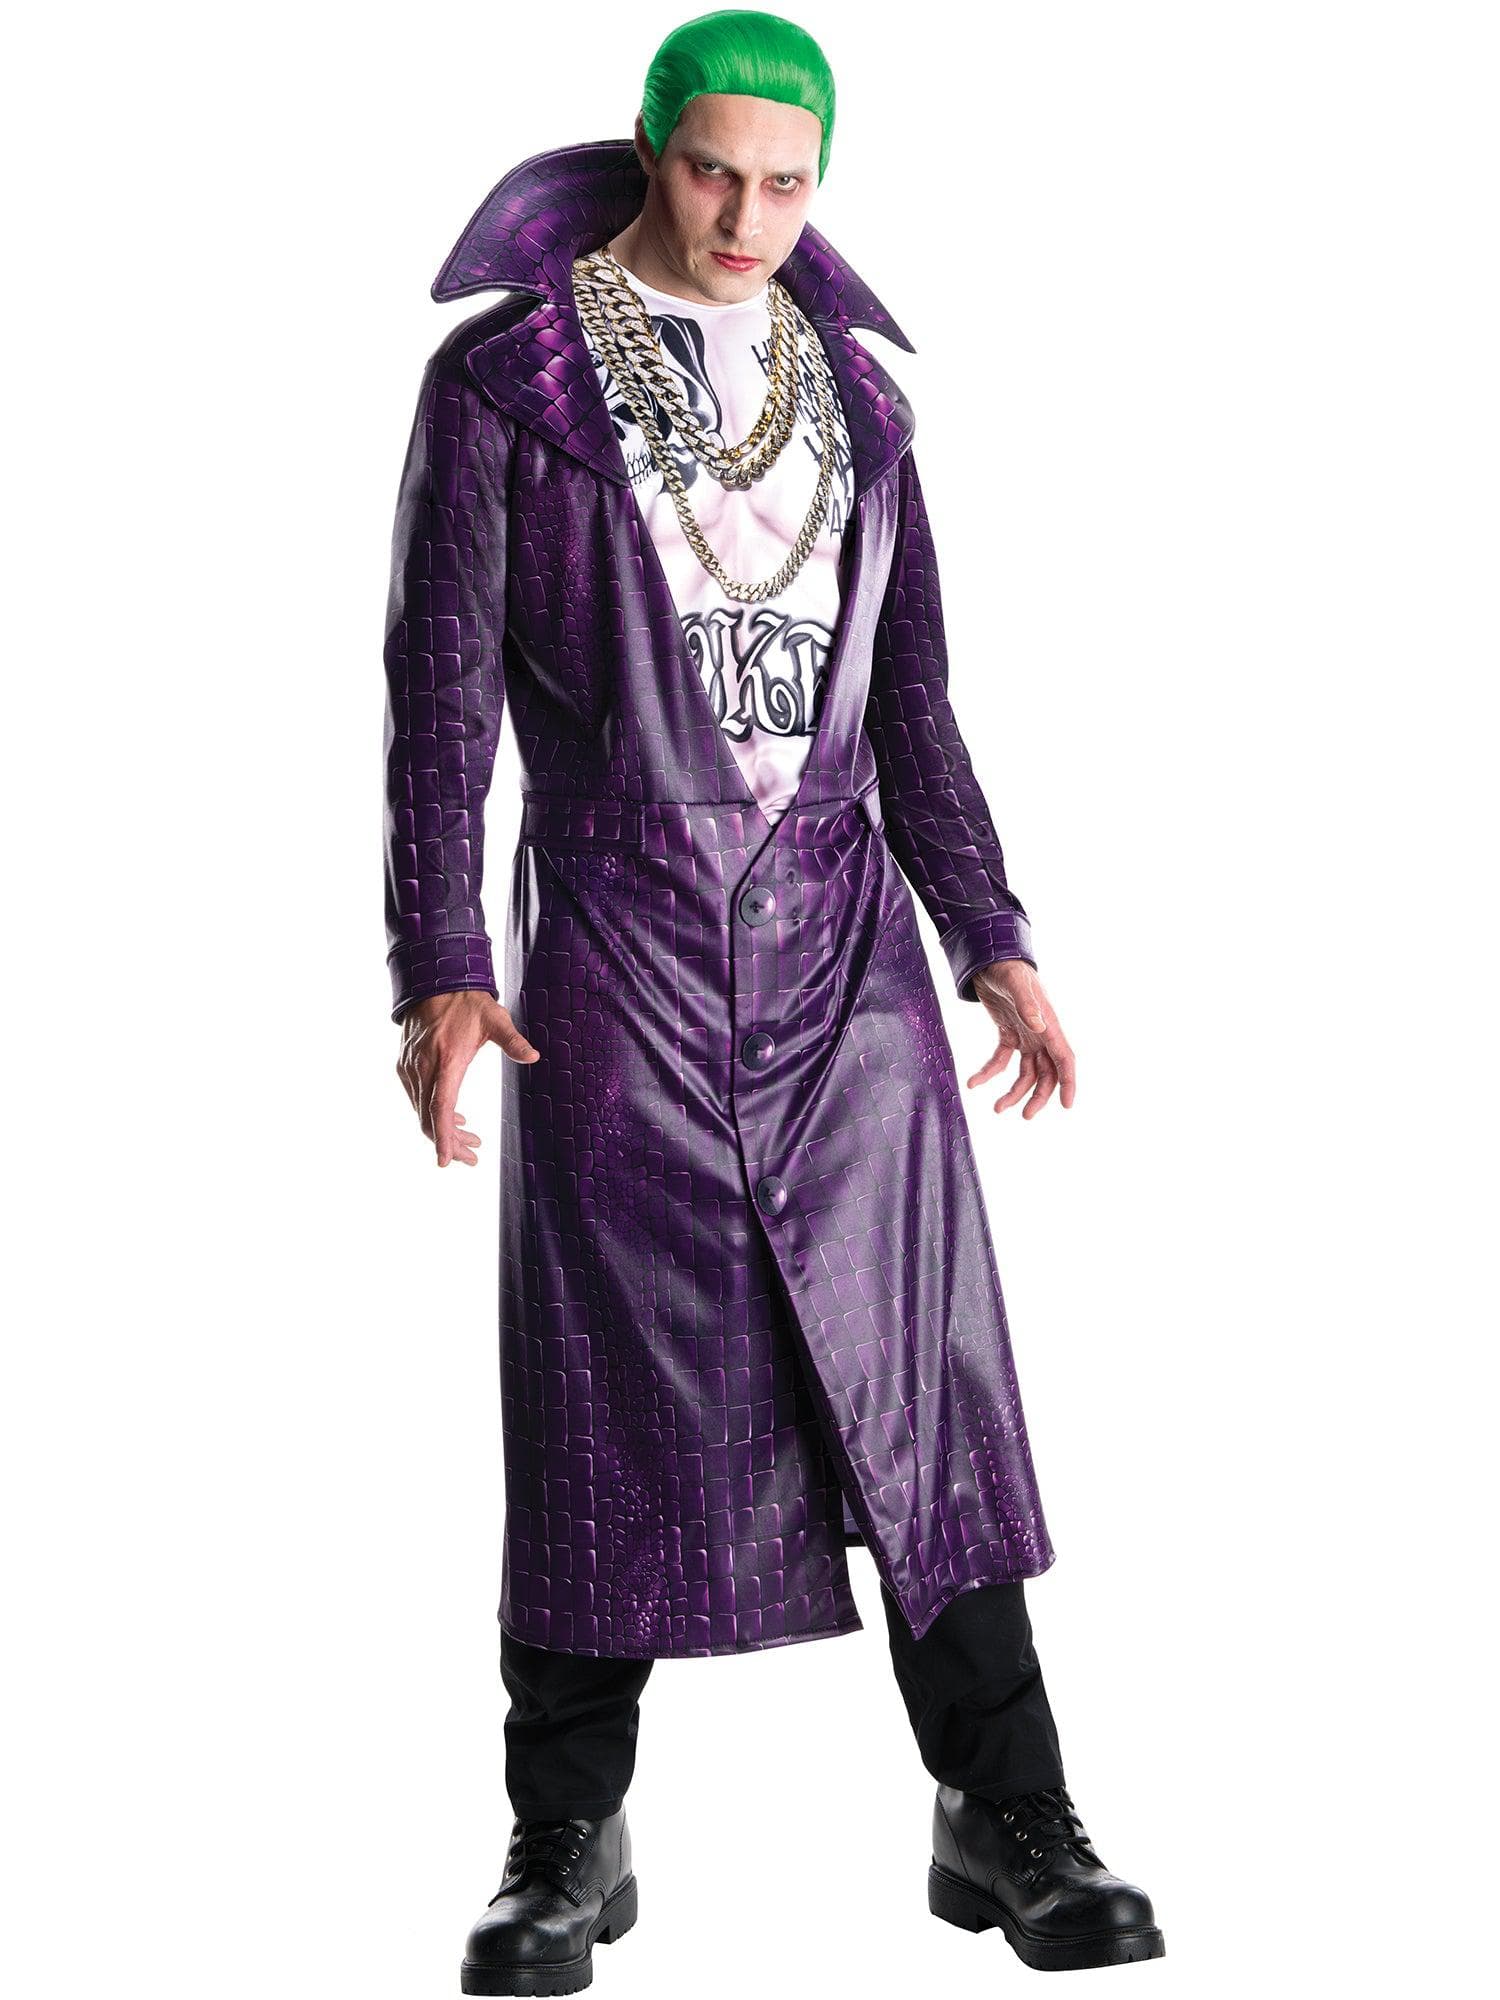 Adult Suicide Squad Joker Costume - costumes.com